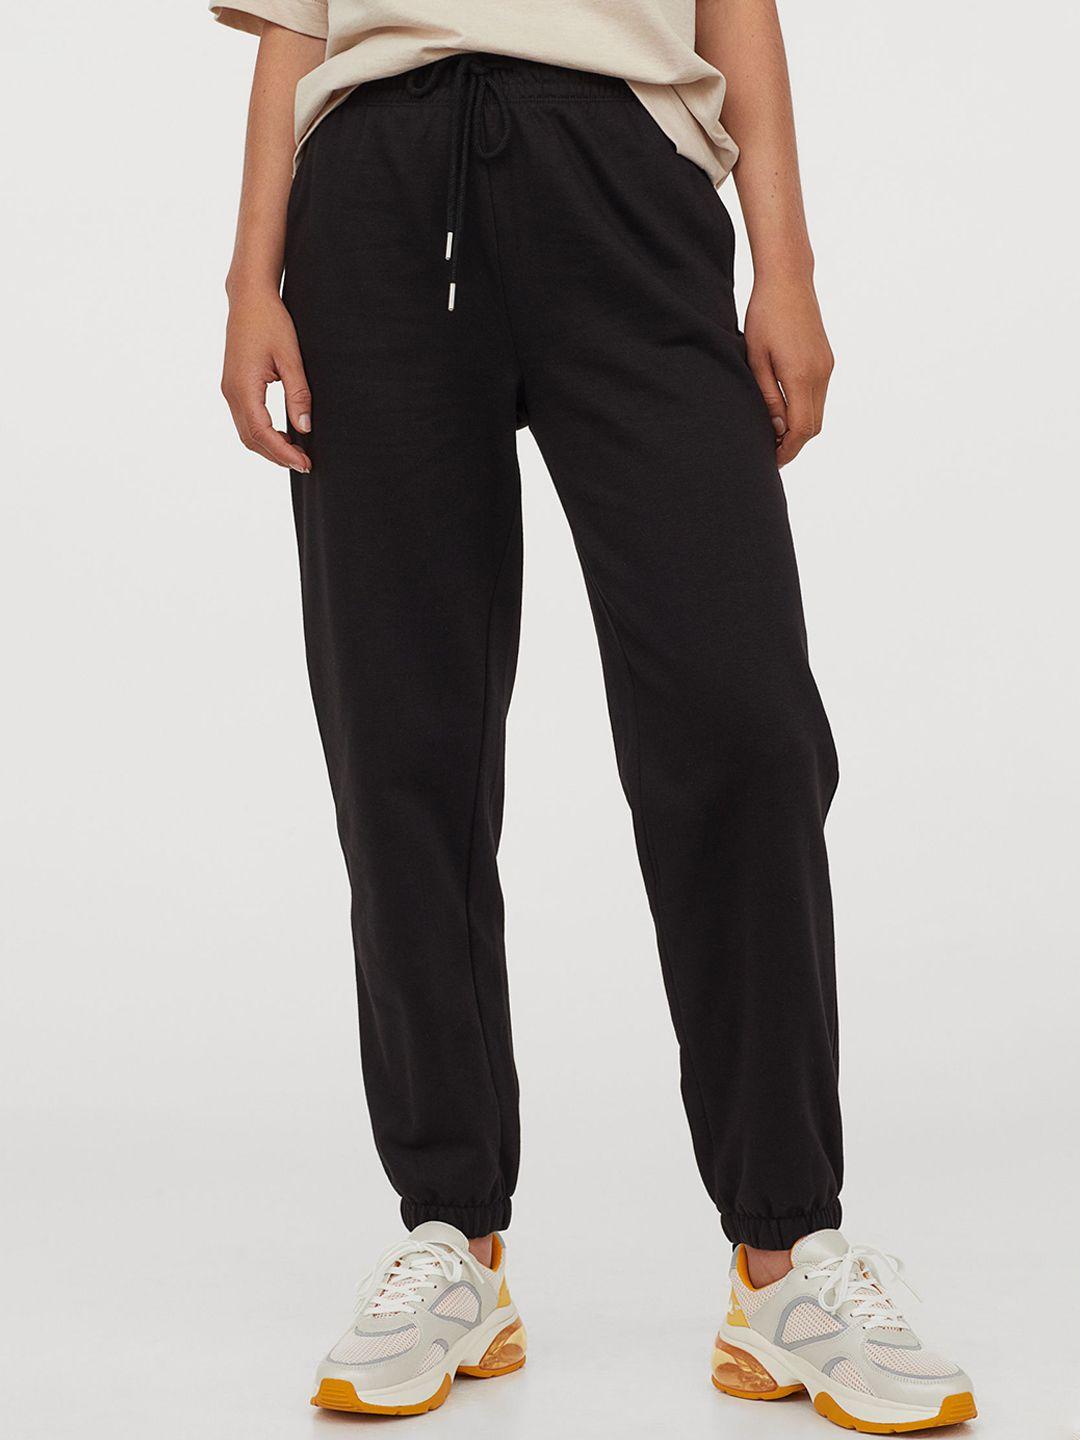 H&M Women Black Cotton-Blend Sweatpants